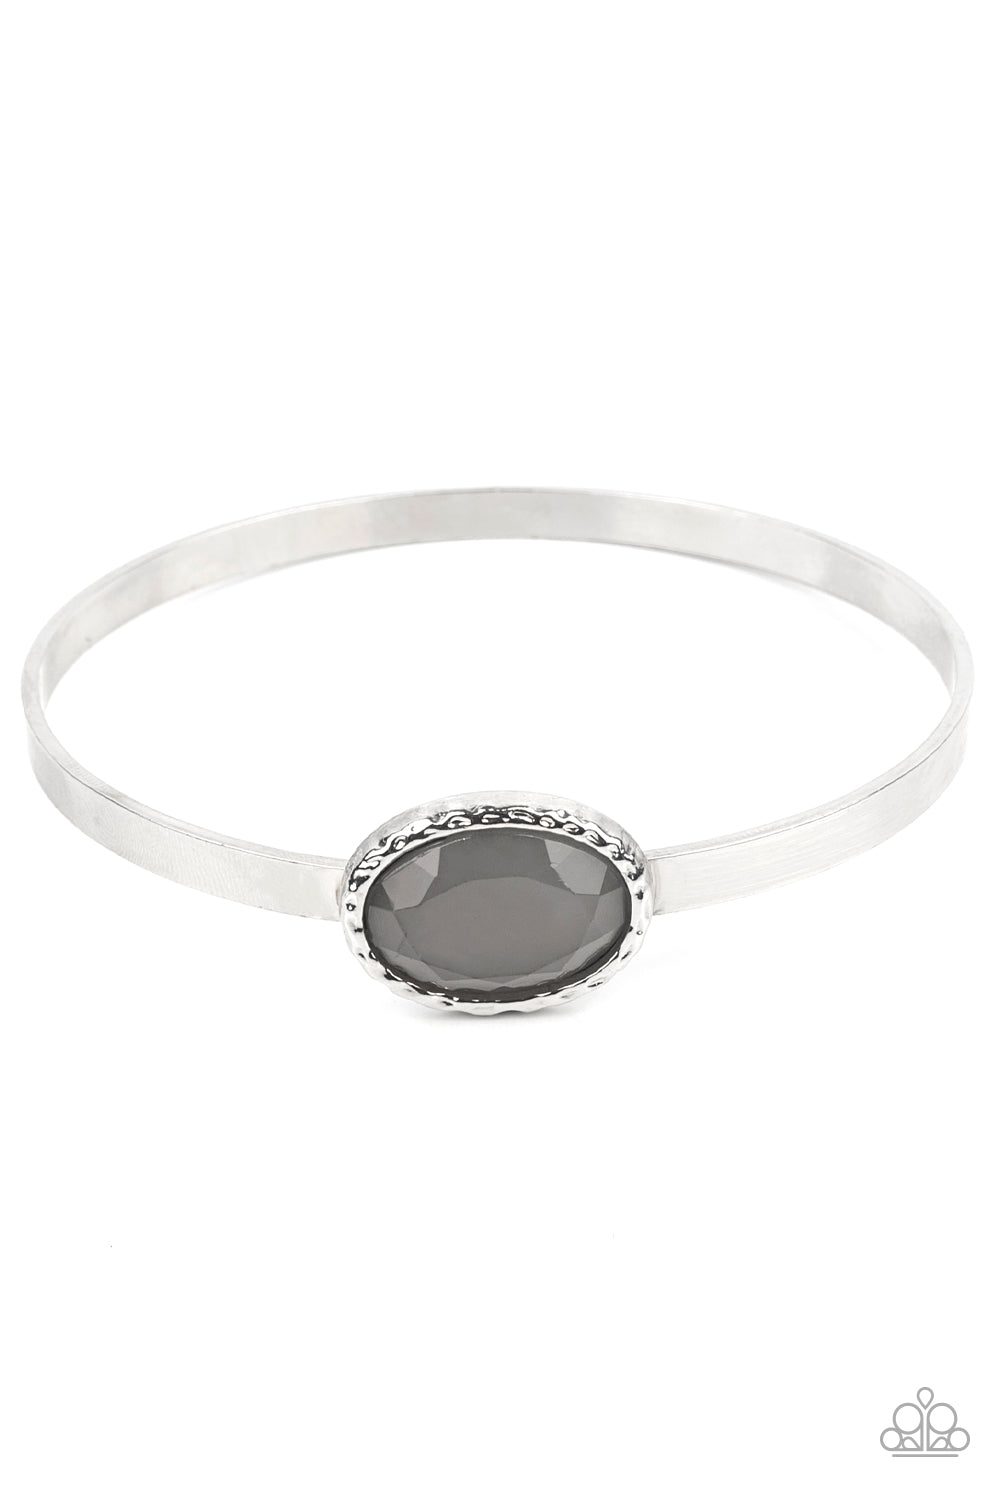 Paparazzi Misty Meadow - Silver Bracelet